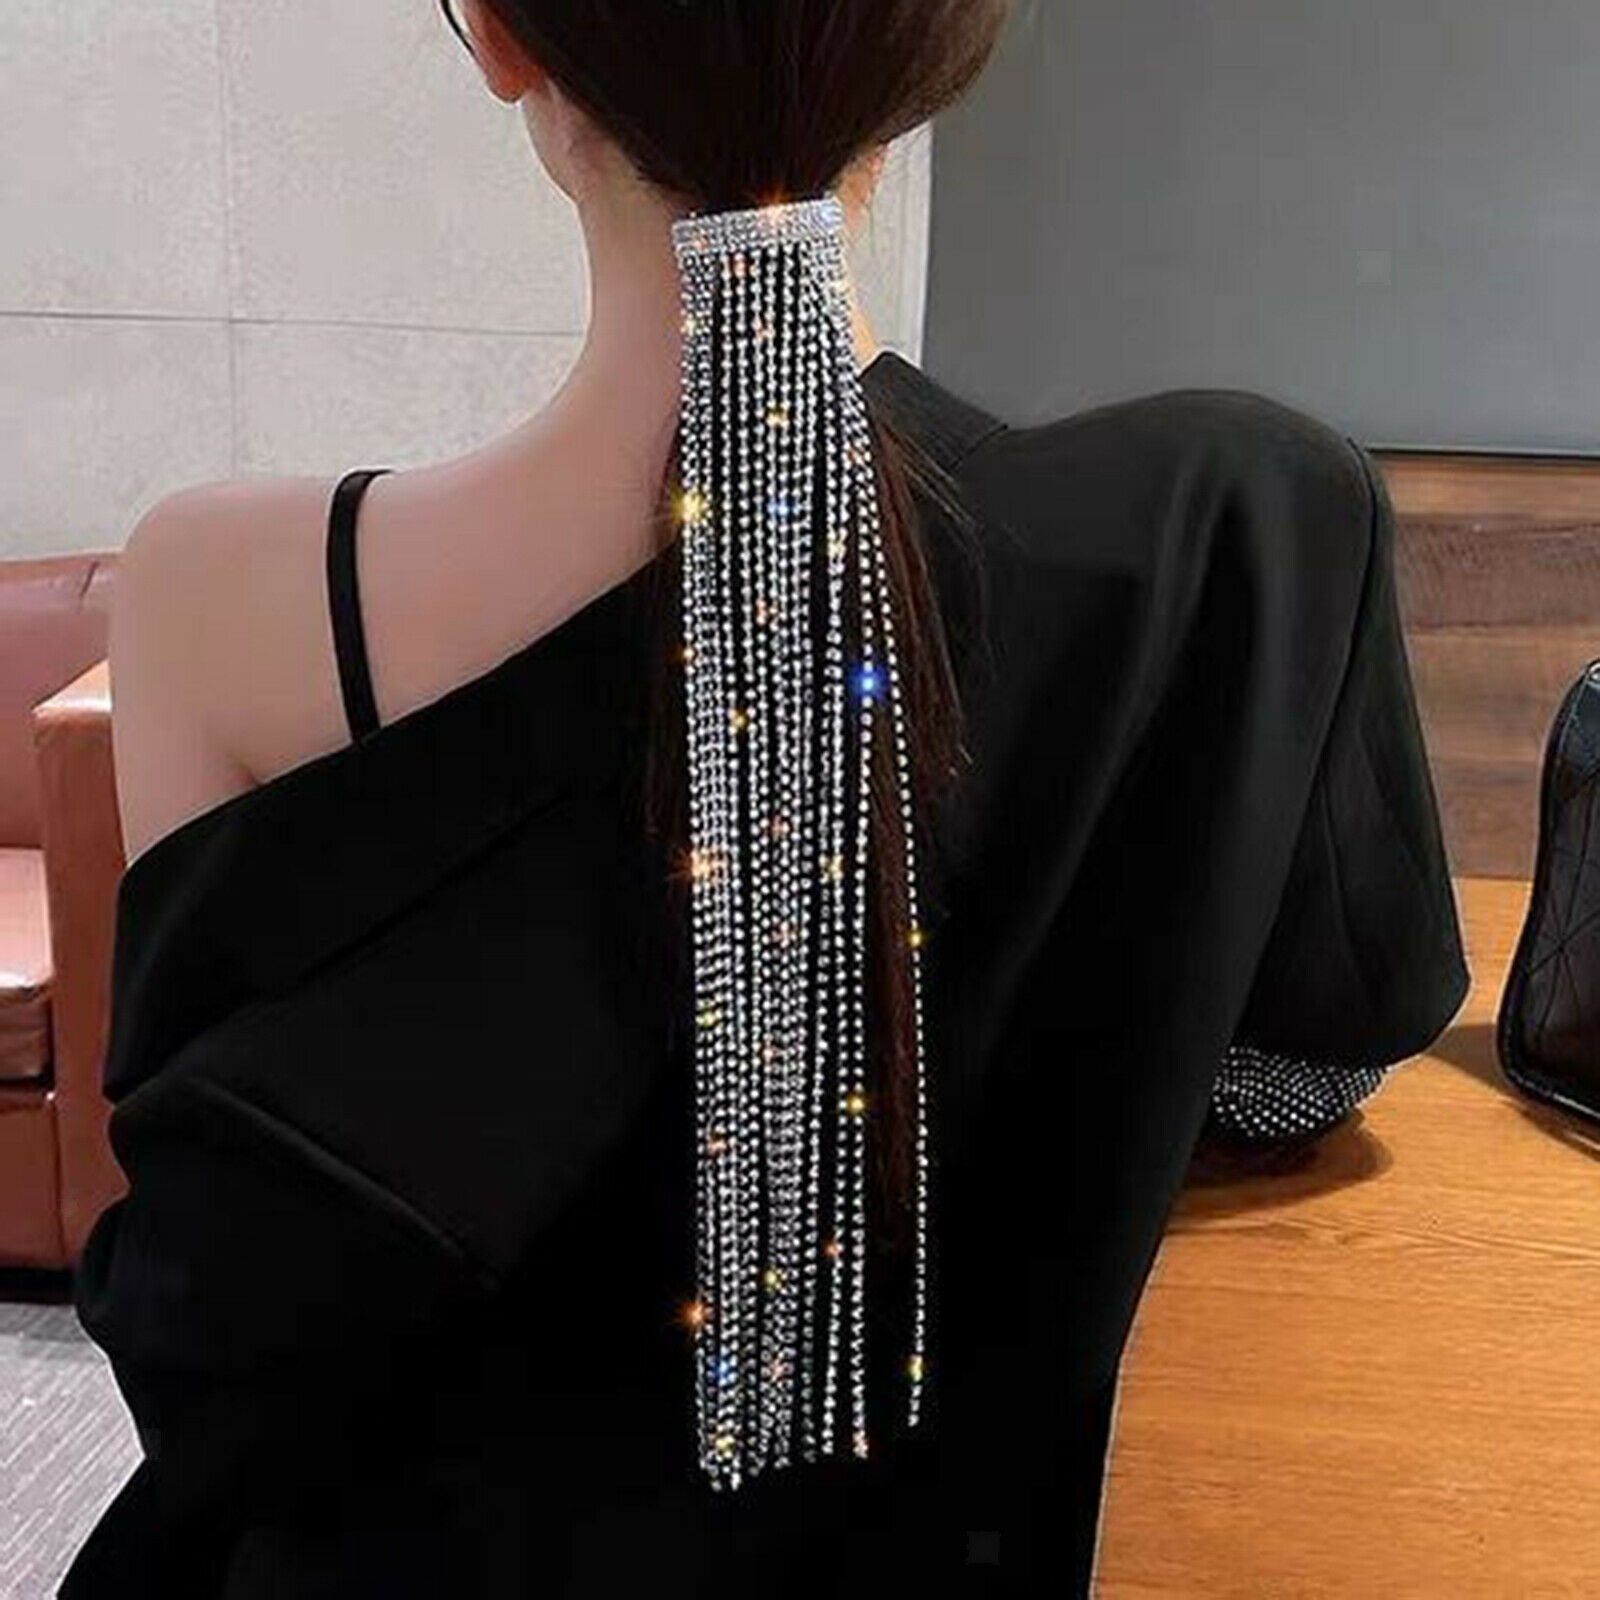 Crystal Rhinestone Beads Hairpin Bridal Tassels Jewelry Ponytail Holder